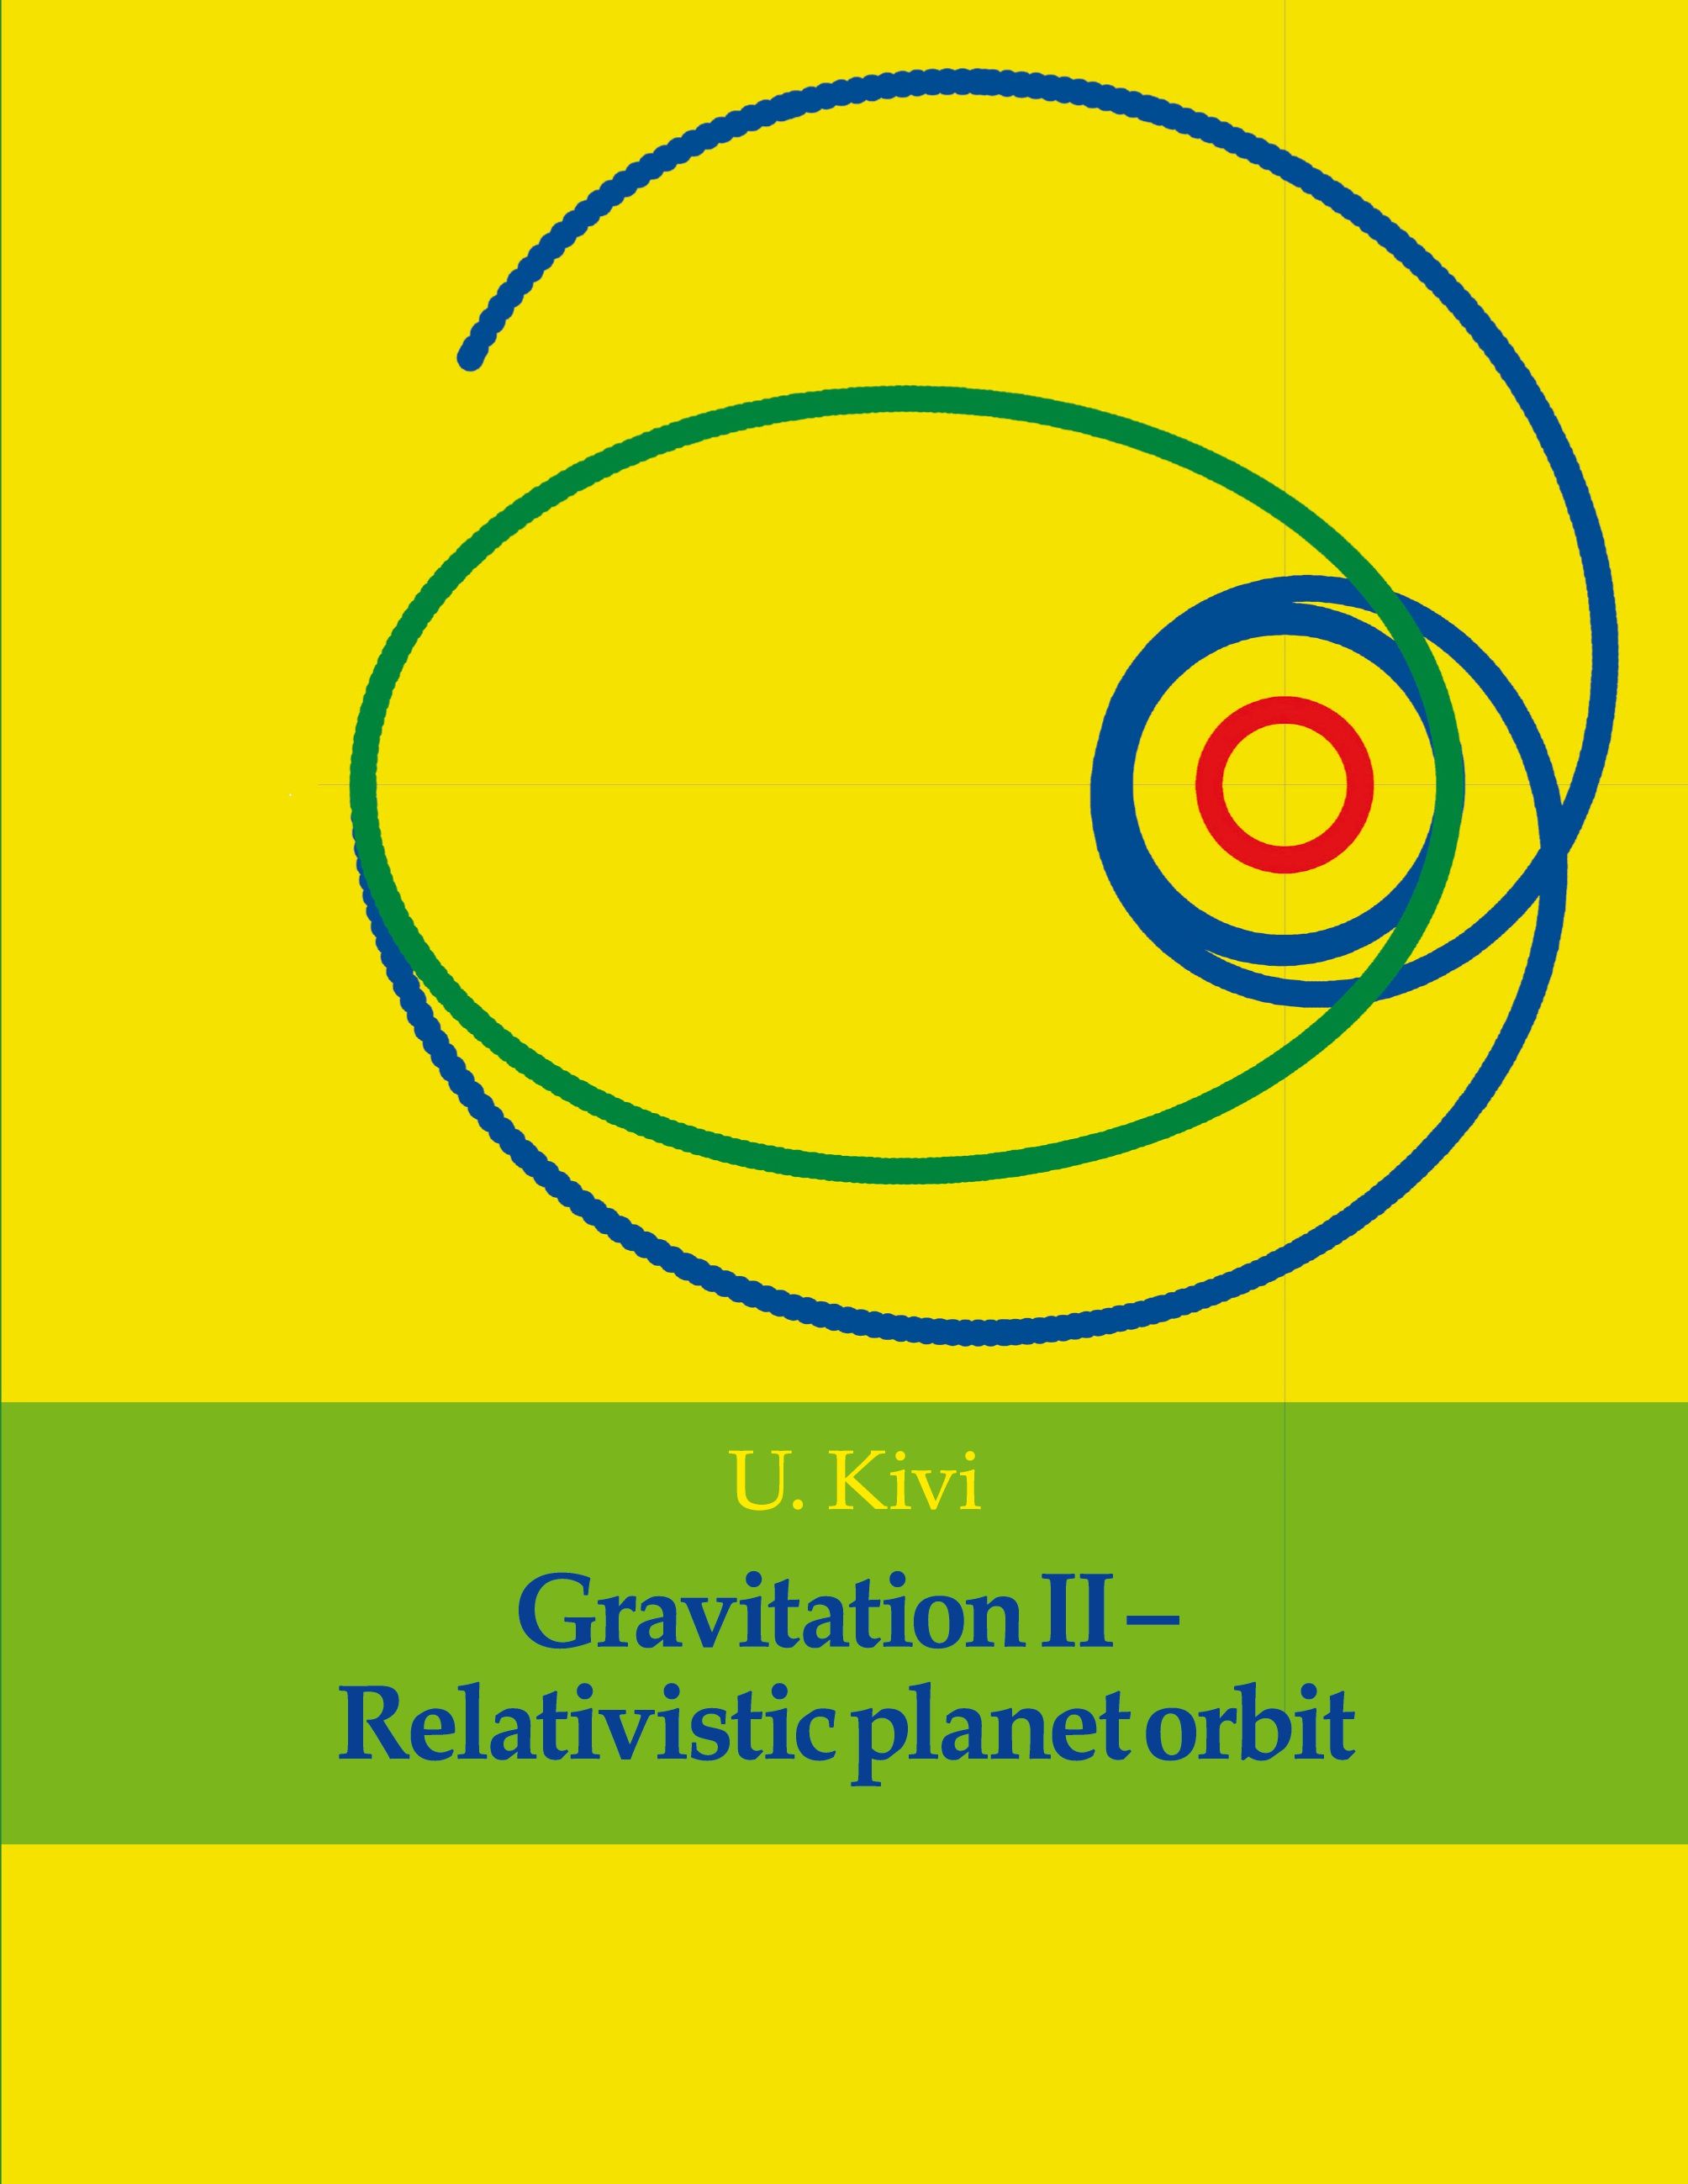 U. Kivi : Gravitation II - Relativistic planet orbit